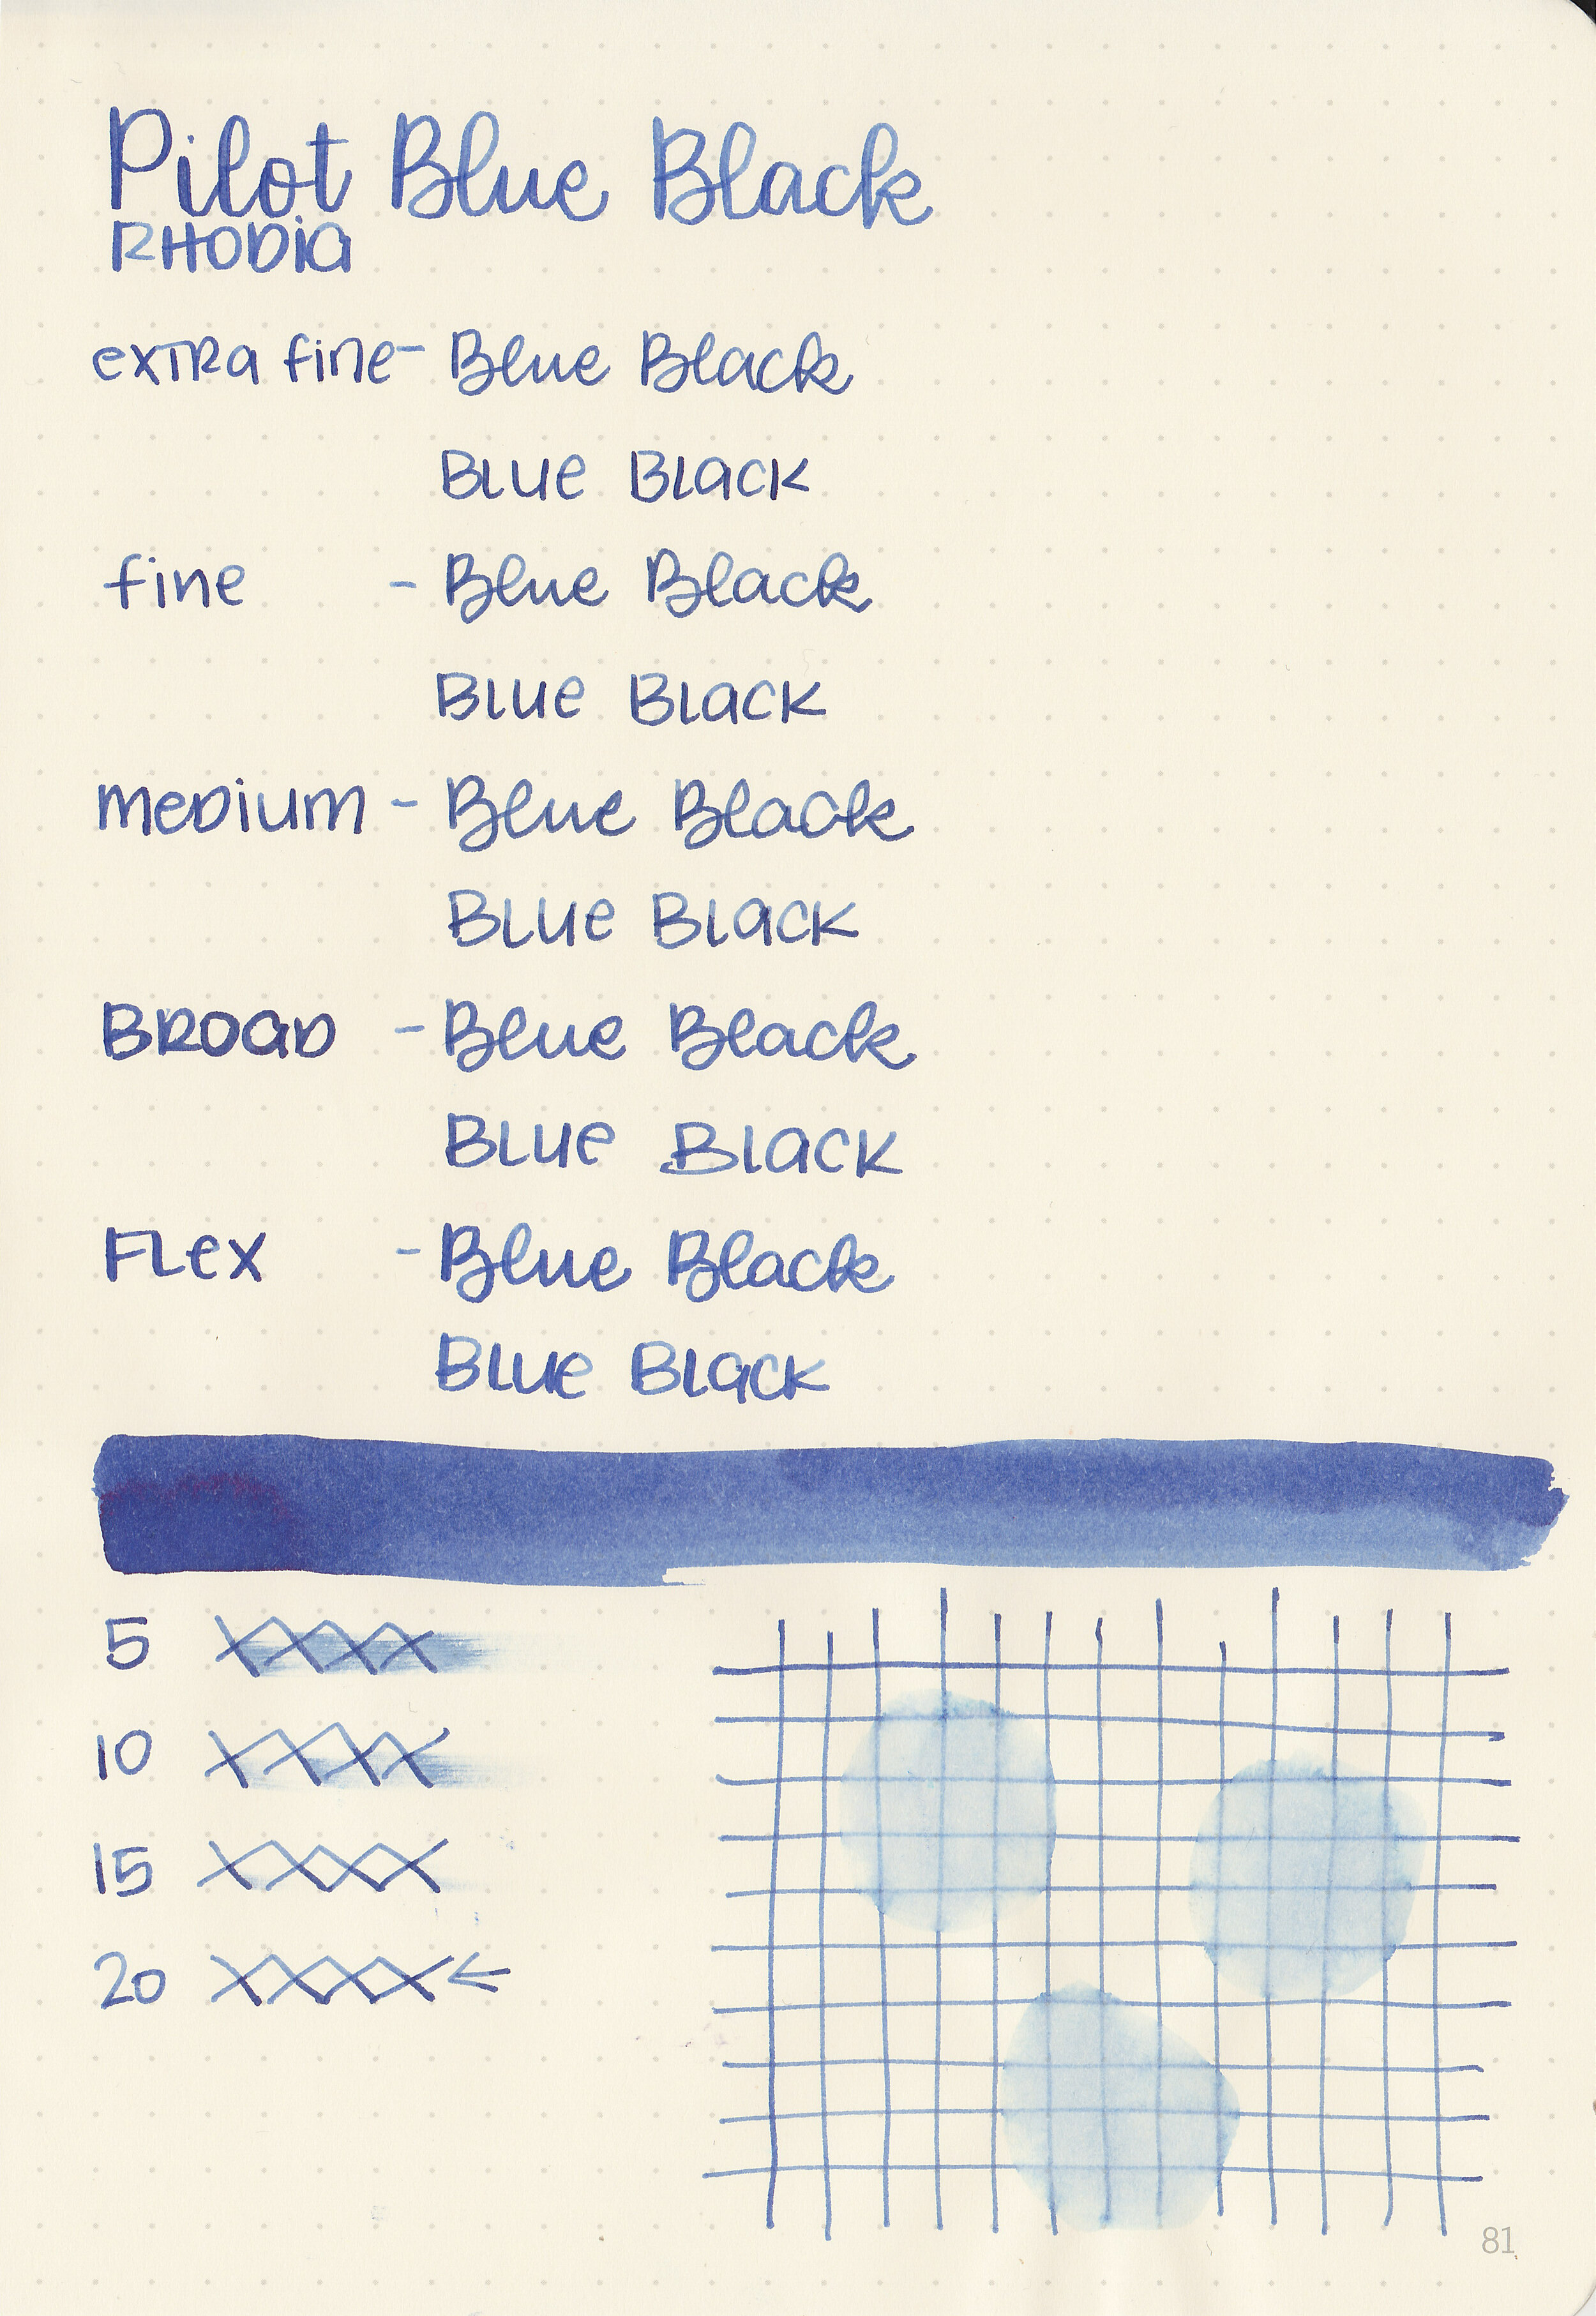 pi-blue-black-5.jpg